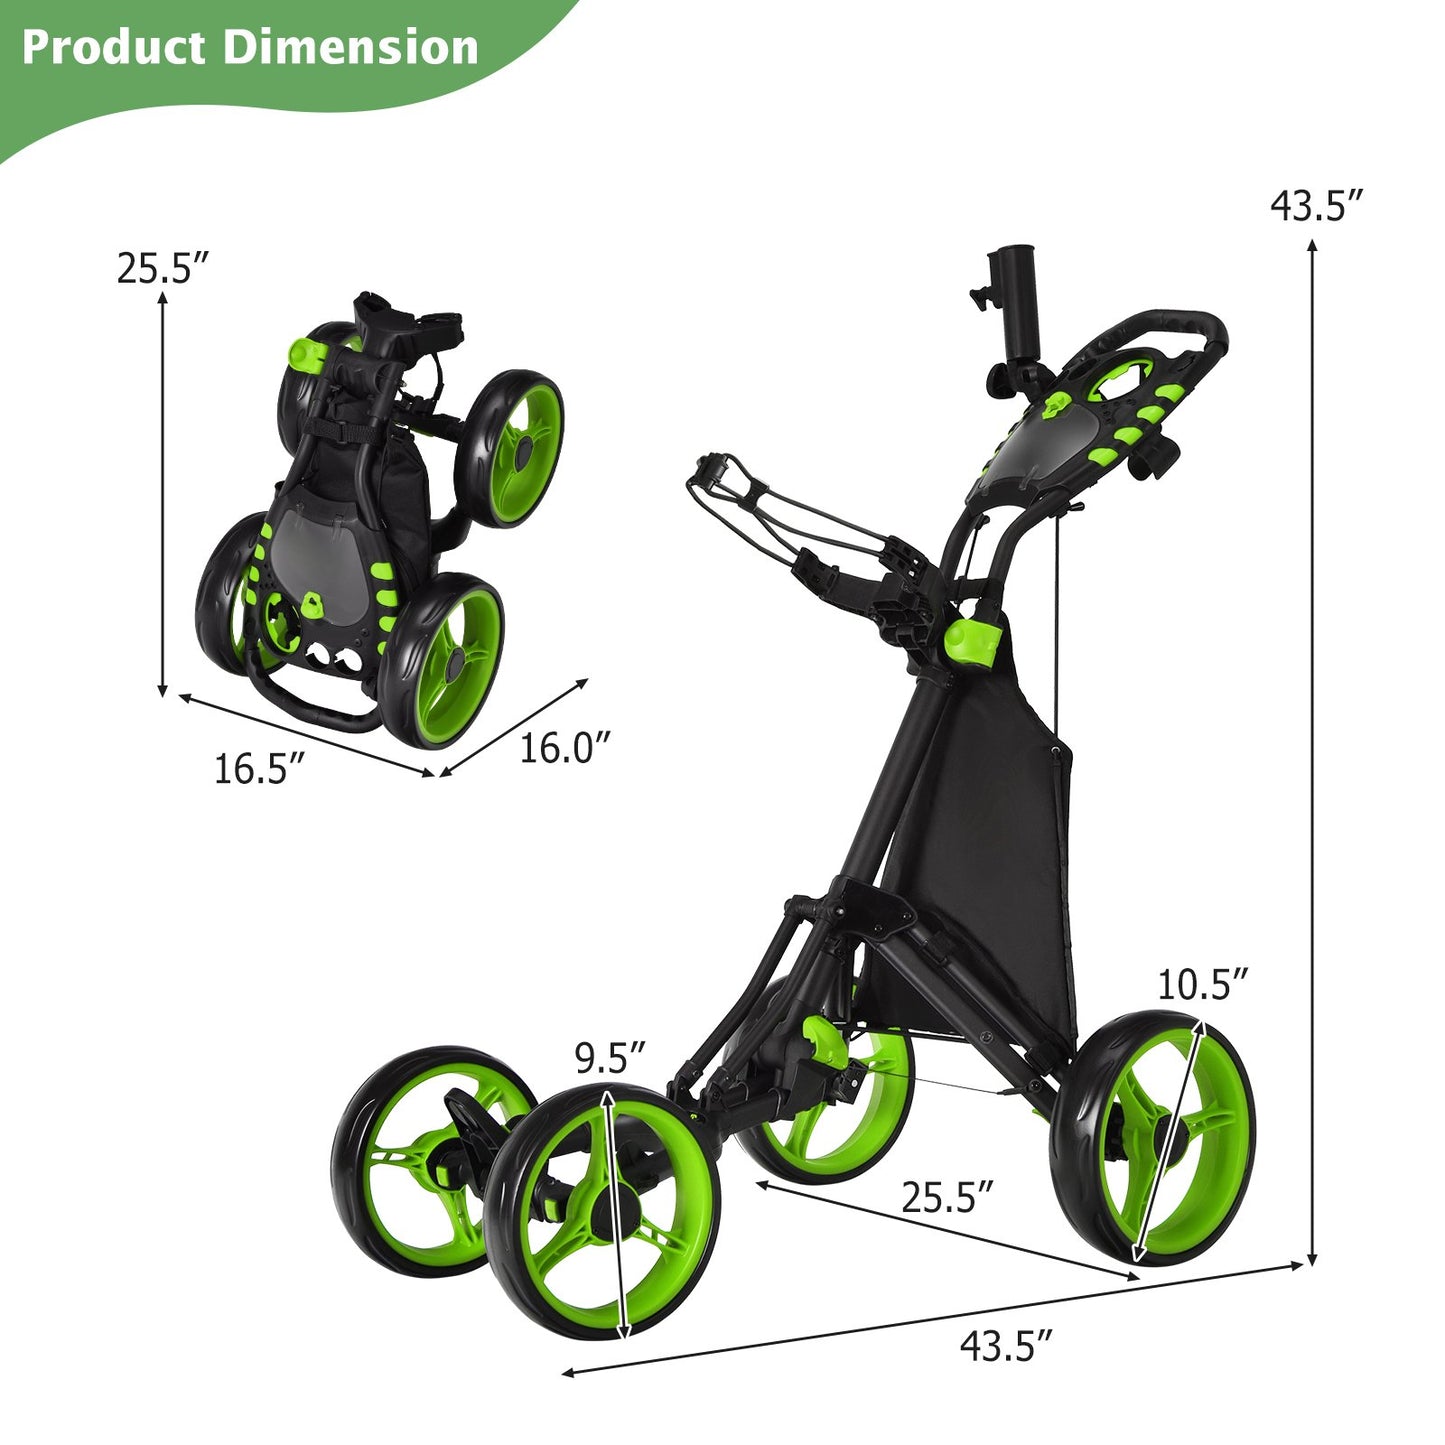 Lightweight Foldable Collapsible 4 Wheels Golf Push Cart, Green